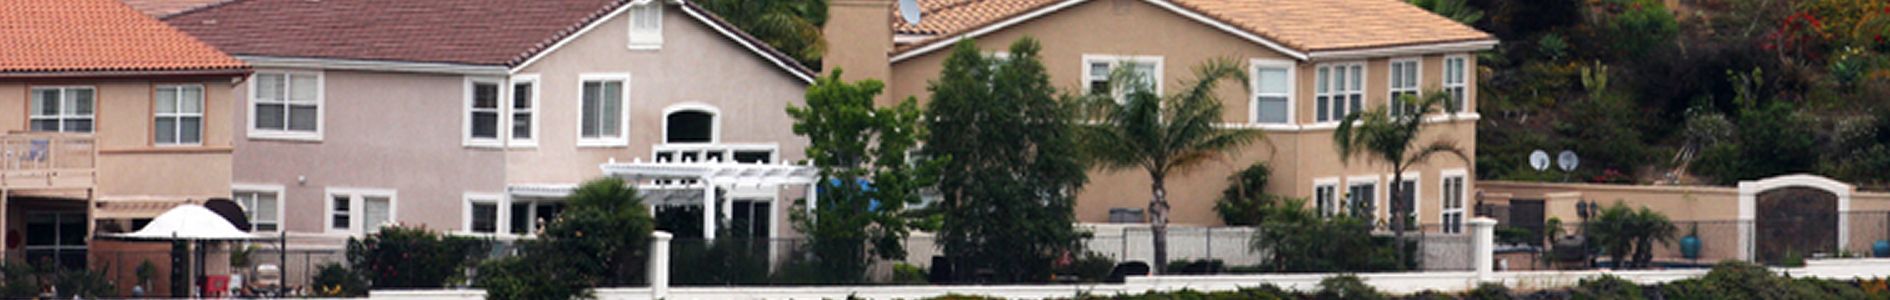 Foreclosure Appraisals Southern California Appraisals